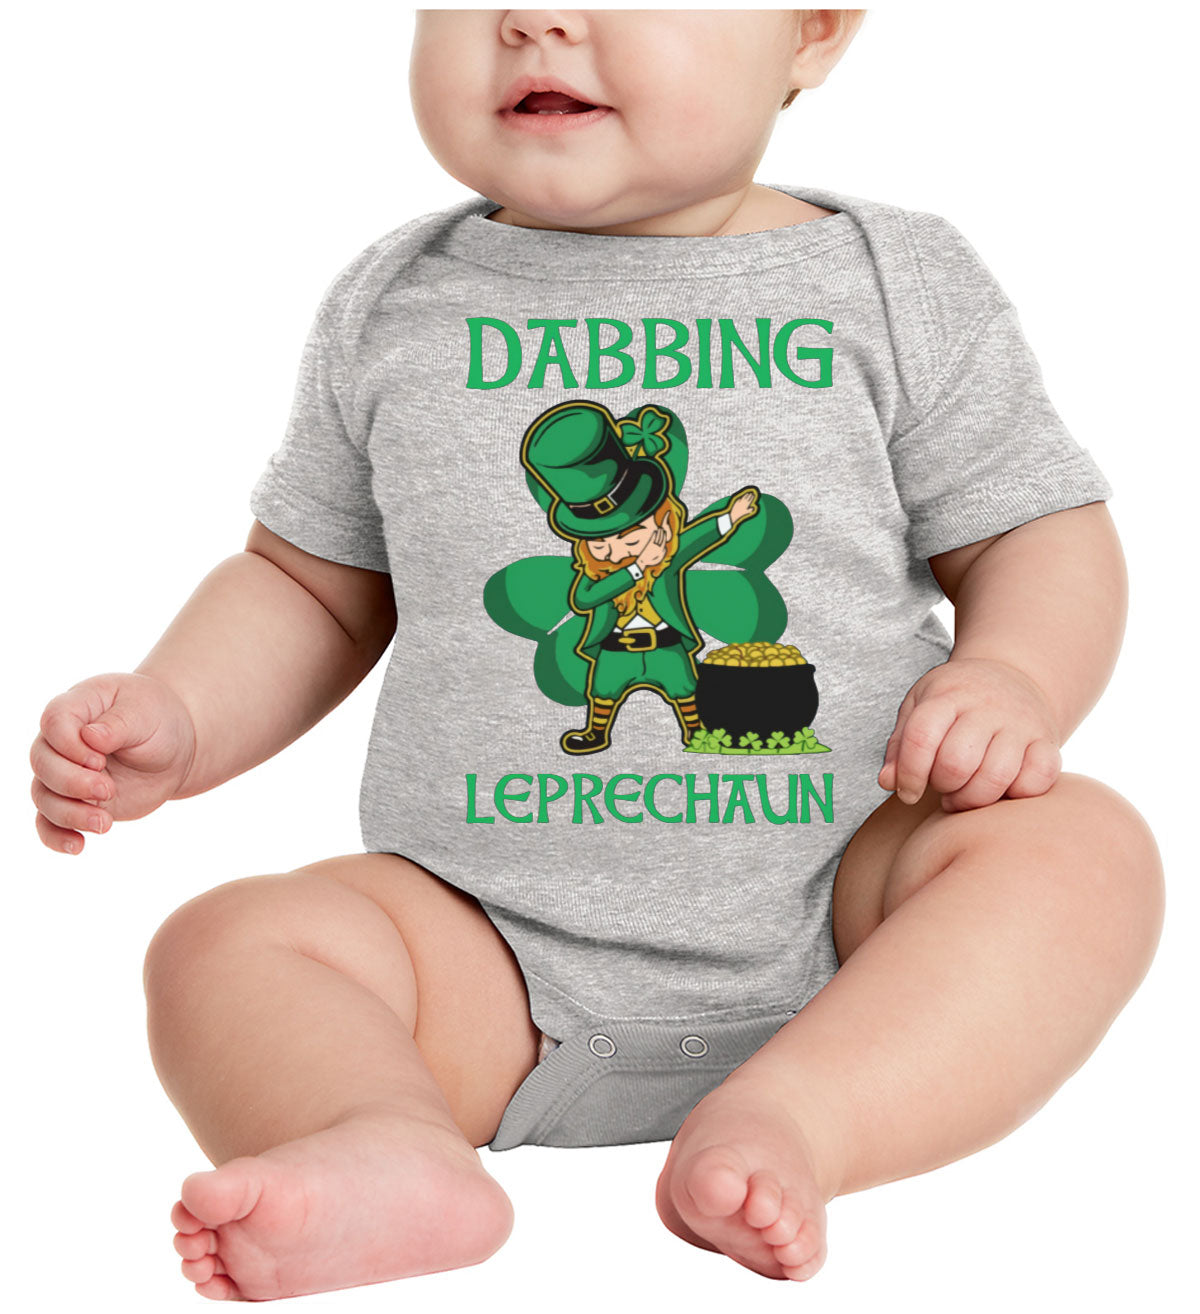 Dabbing Leprechaun St. Patrick's Day Baby Onesie